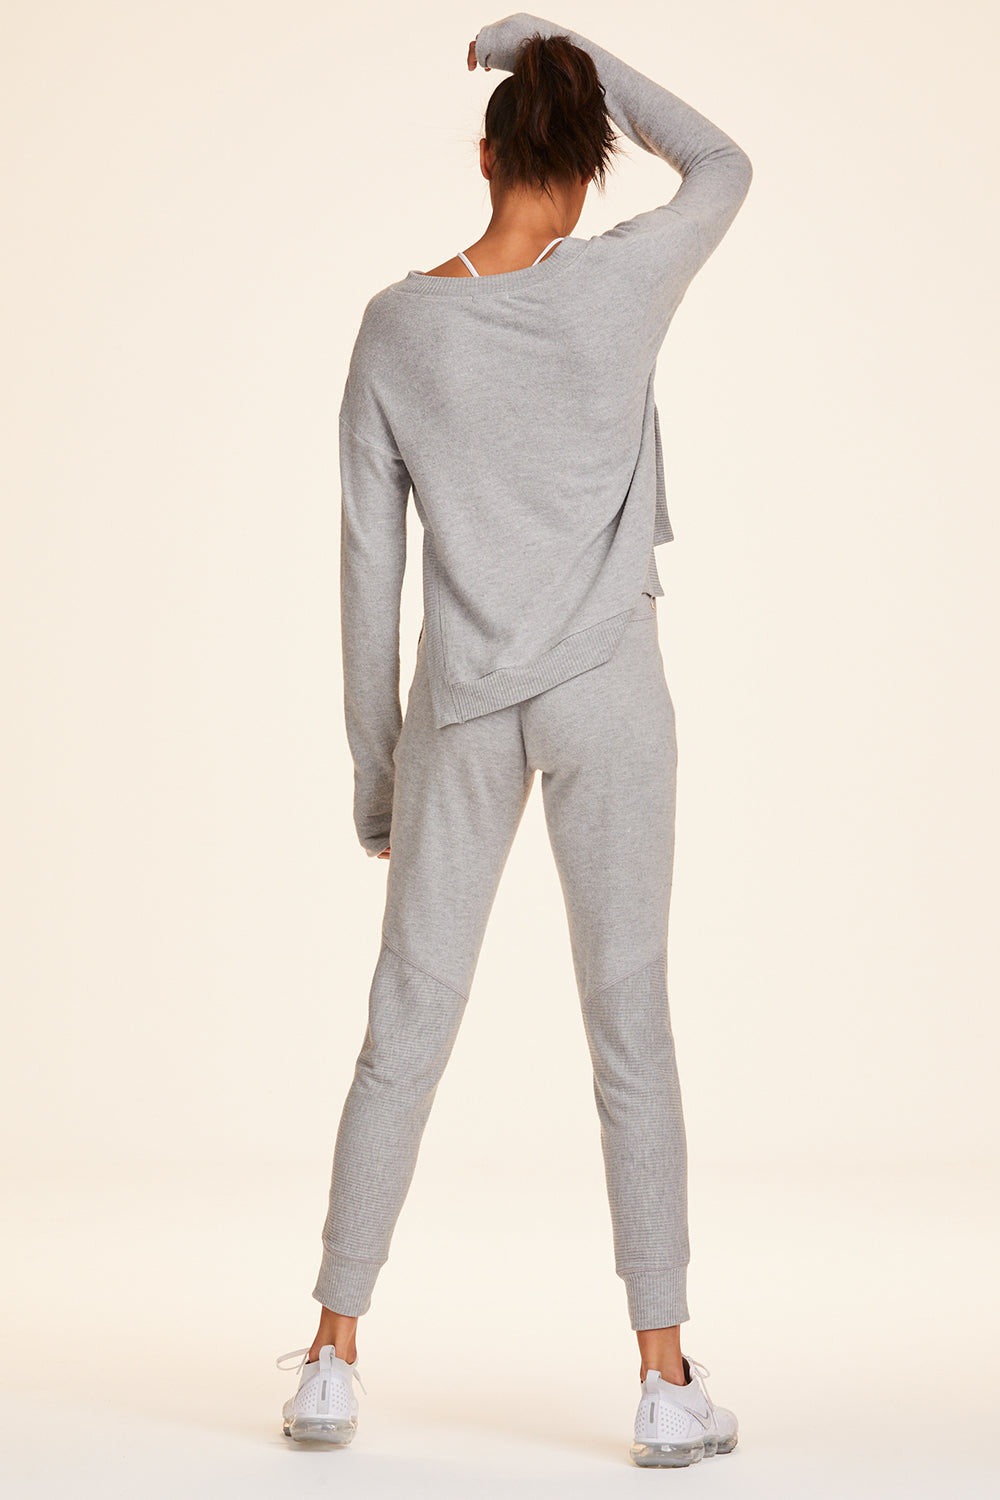 Back view of Alala Women's Luxury Athleisure super-soft grey sweatpant